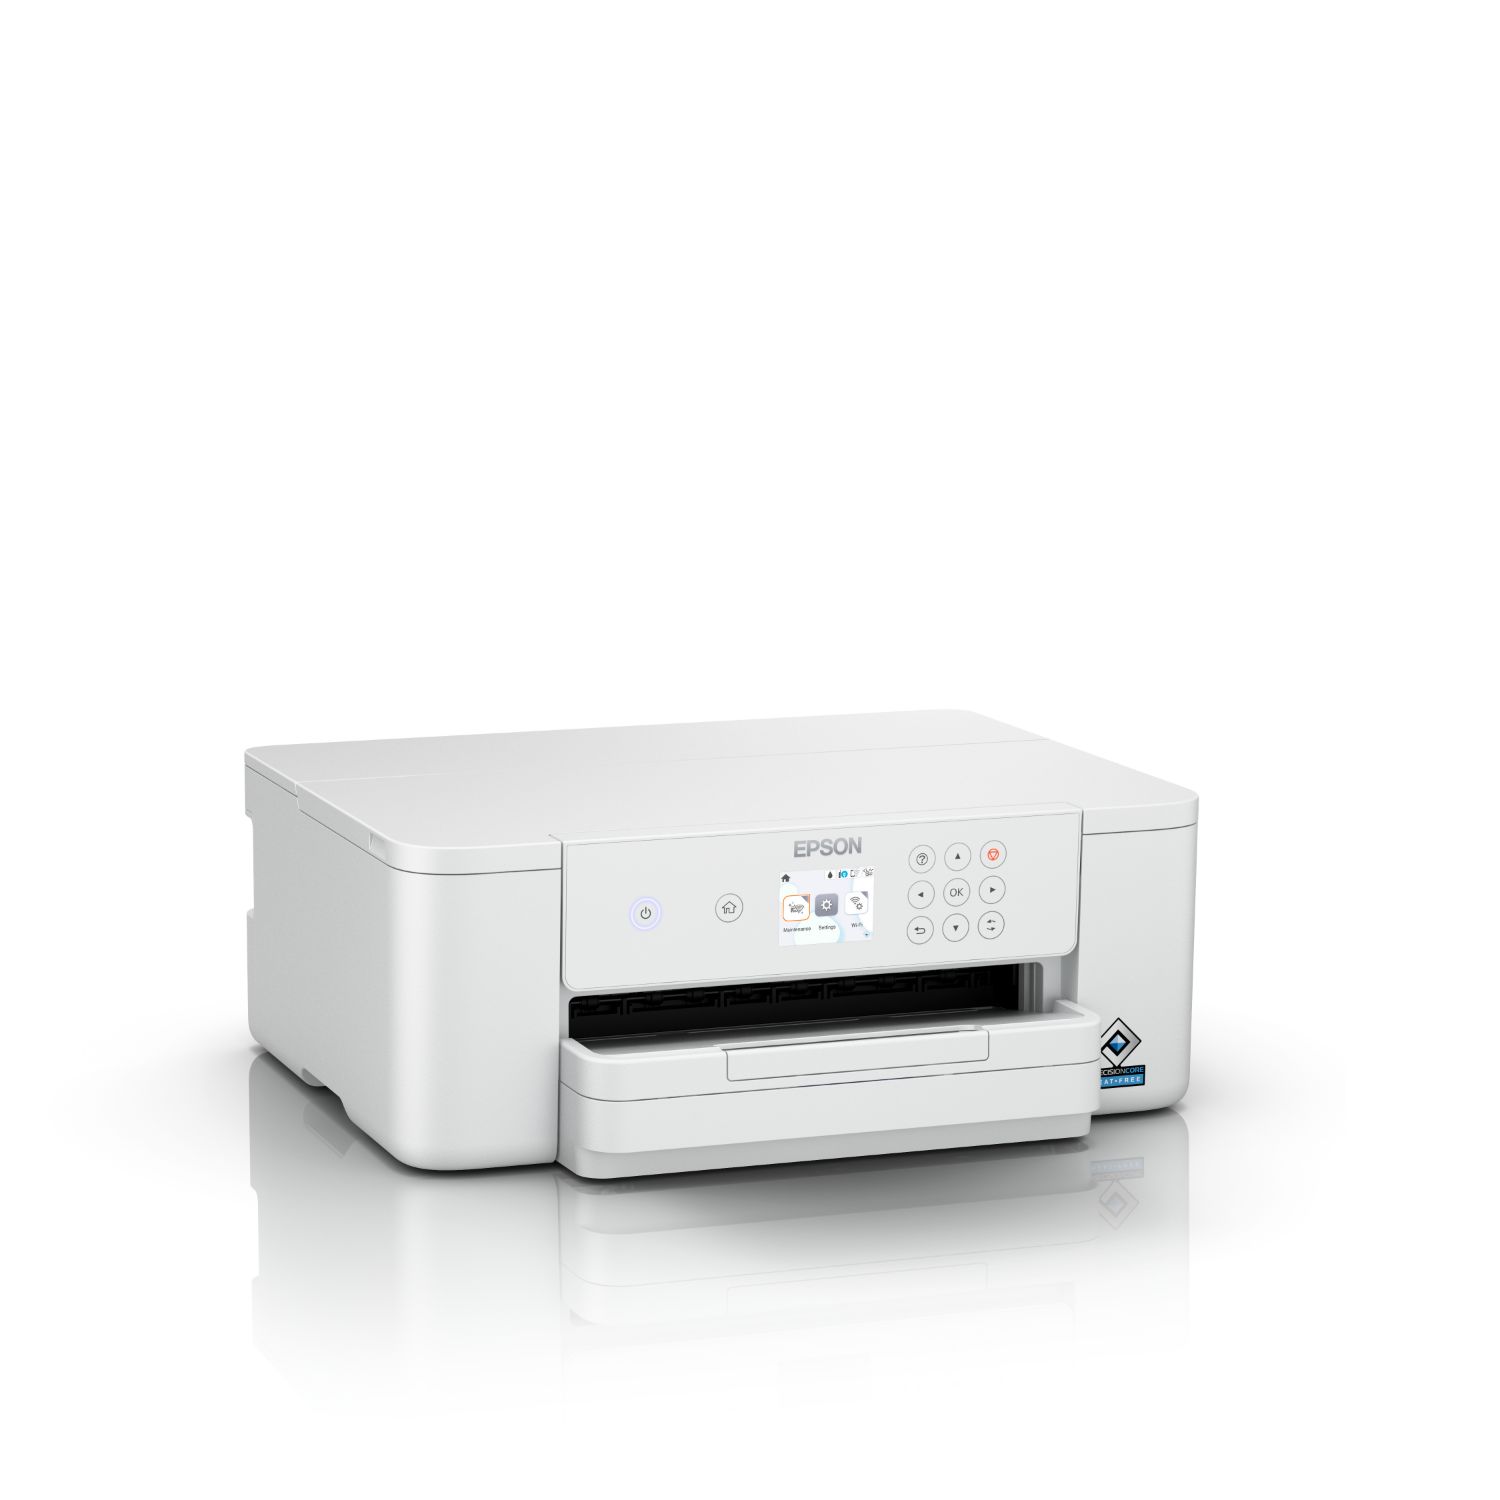 C11CK18401 - Impresora Epson WorkForce Pro WF-C4310DW Color A4 USB 2.0 WiFi LAN Dplex Blanca (C11CK18401)